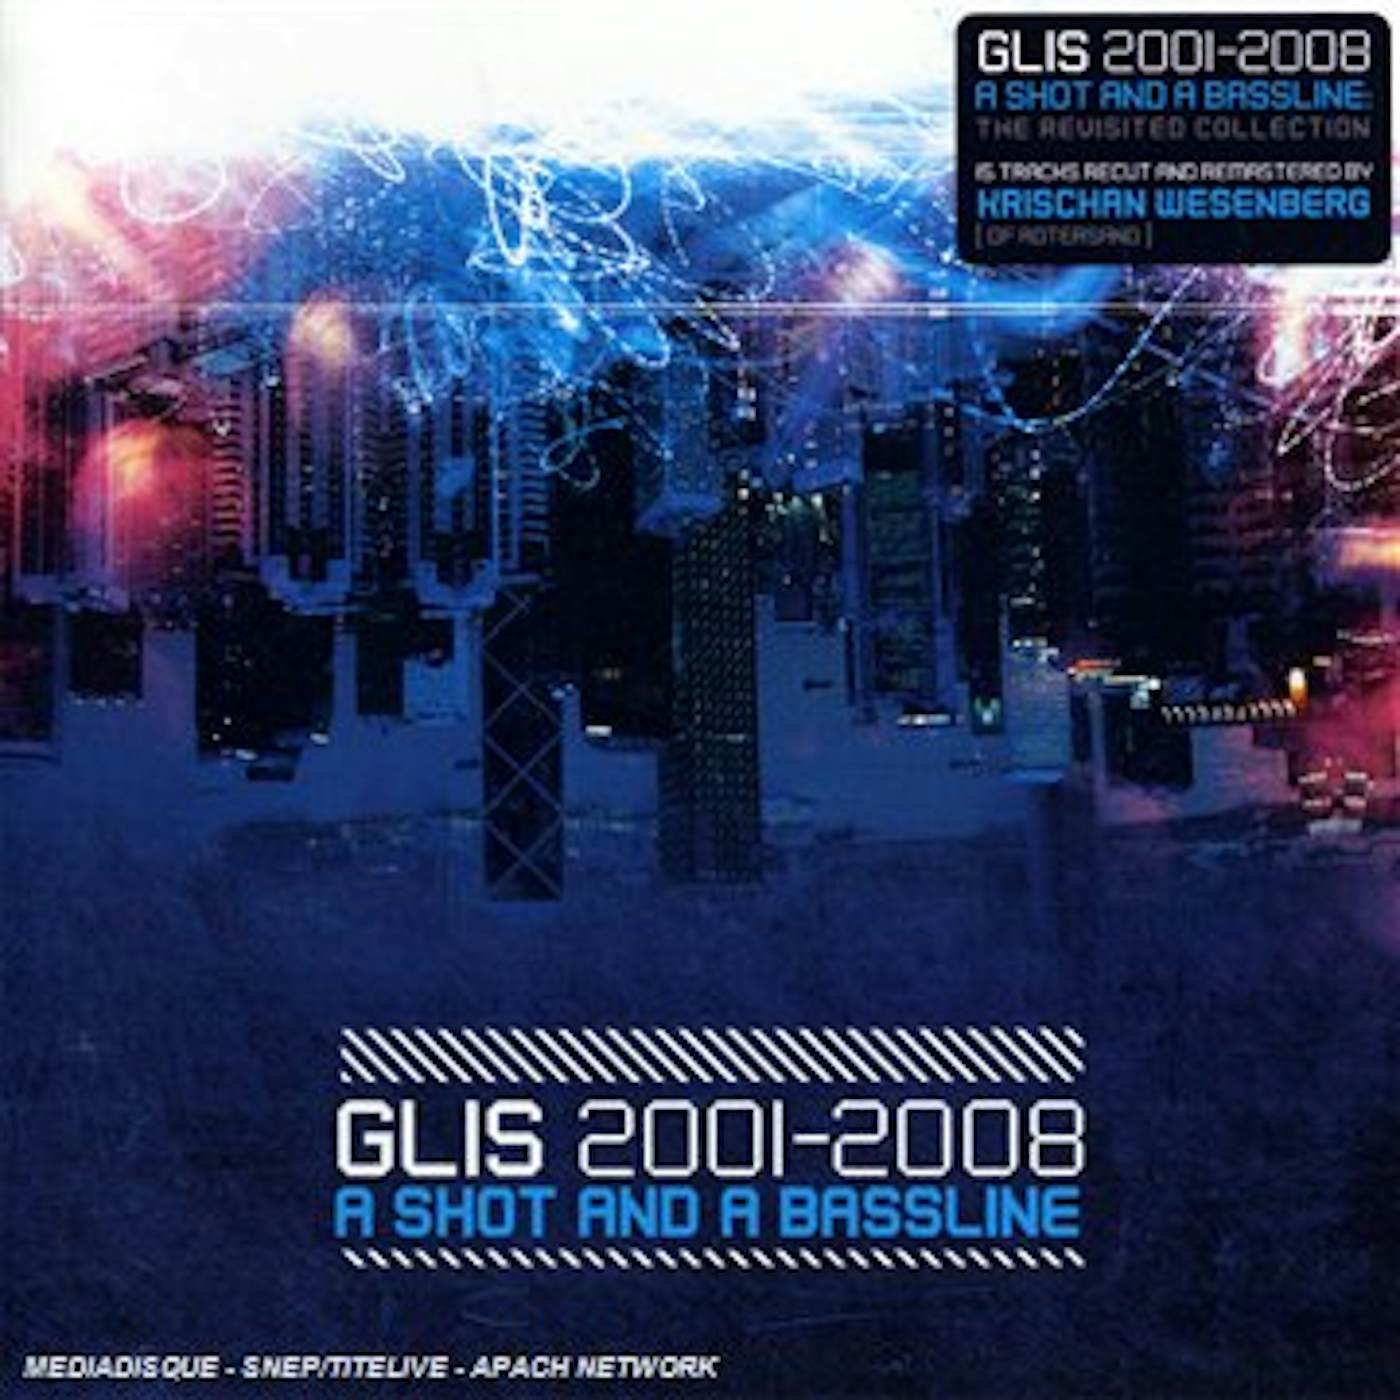 Glis 2001-2008: SHOT & A BASSLIVE CD